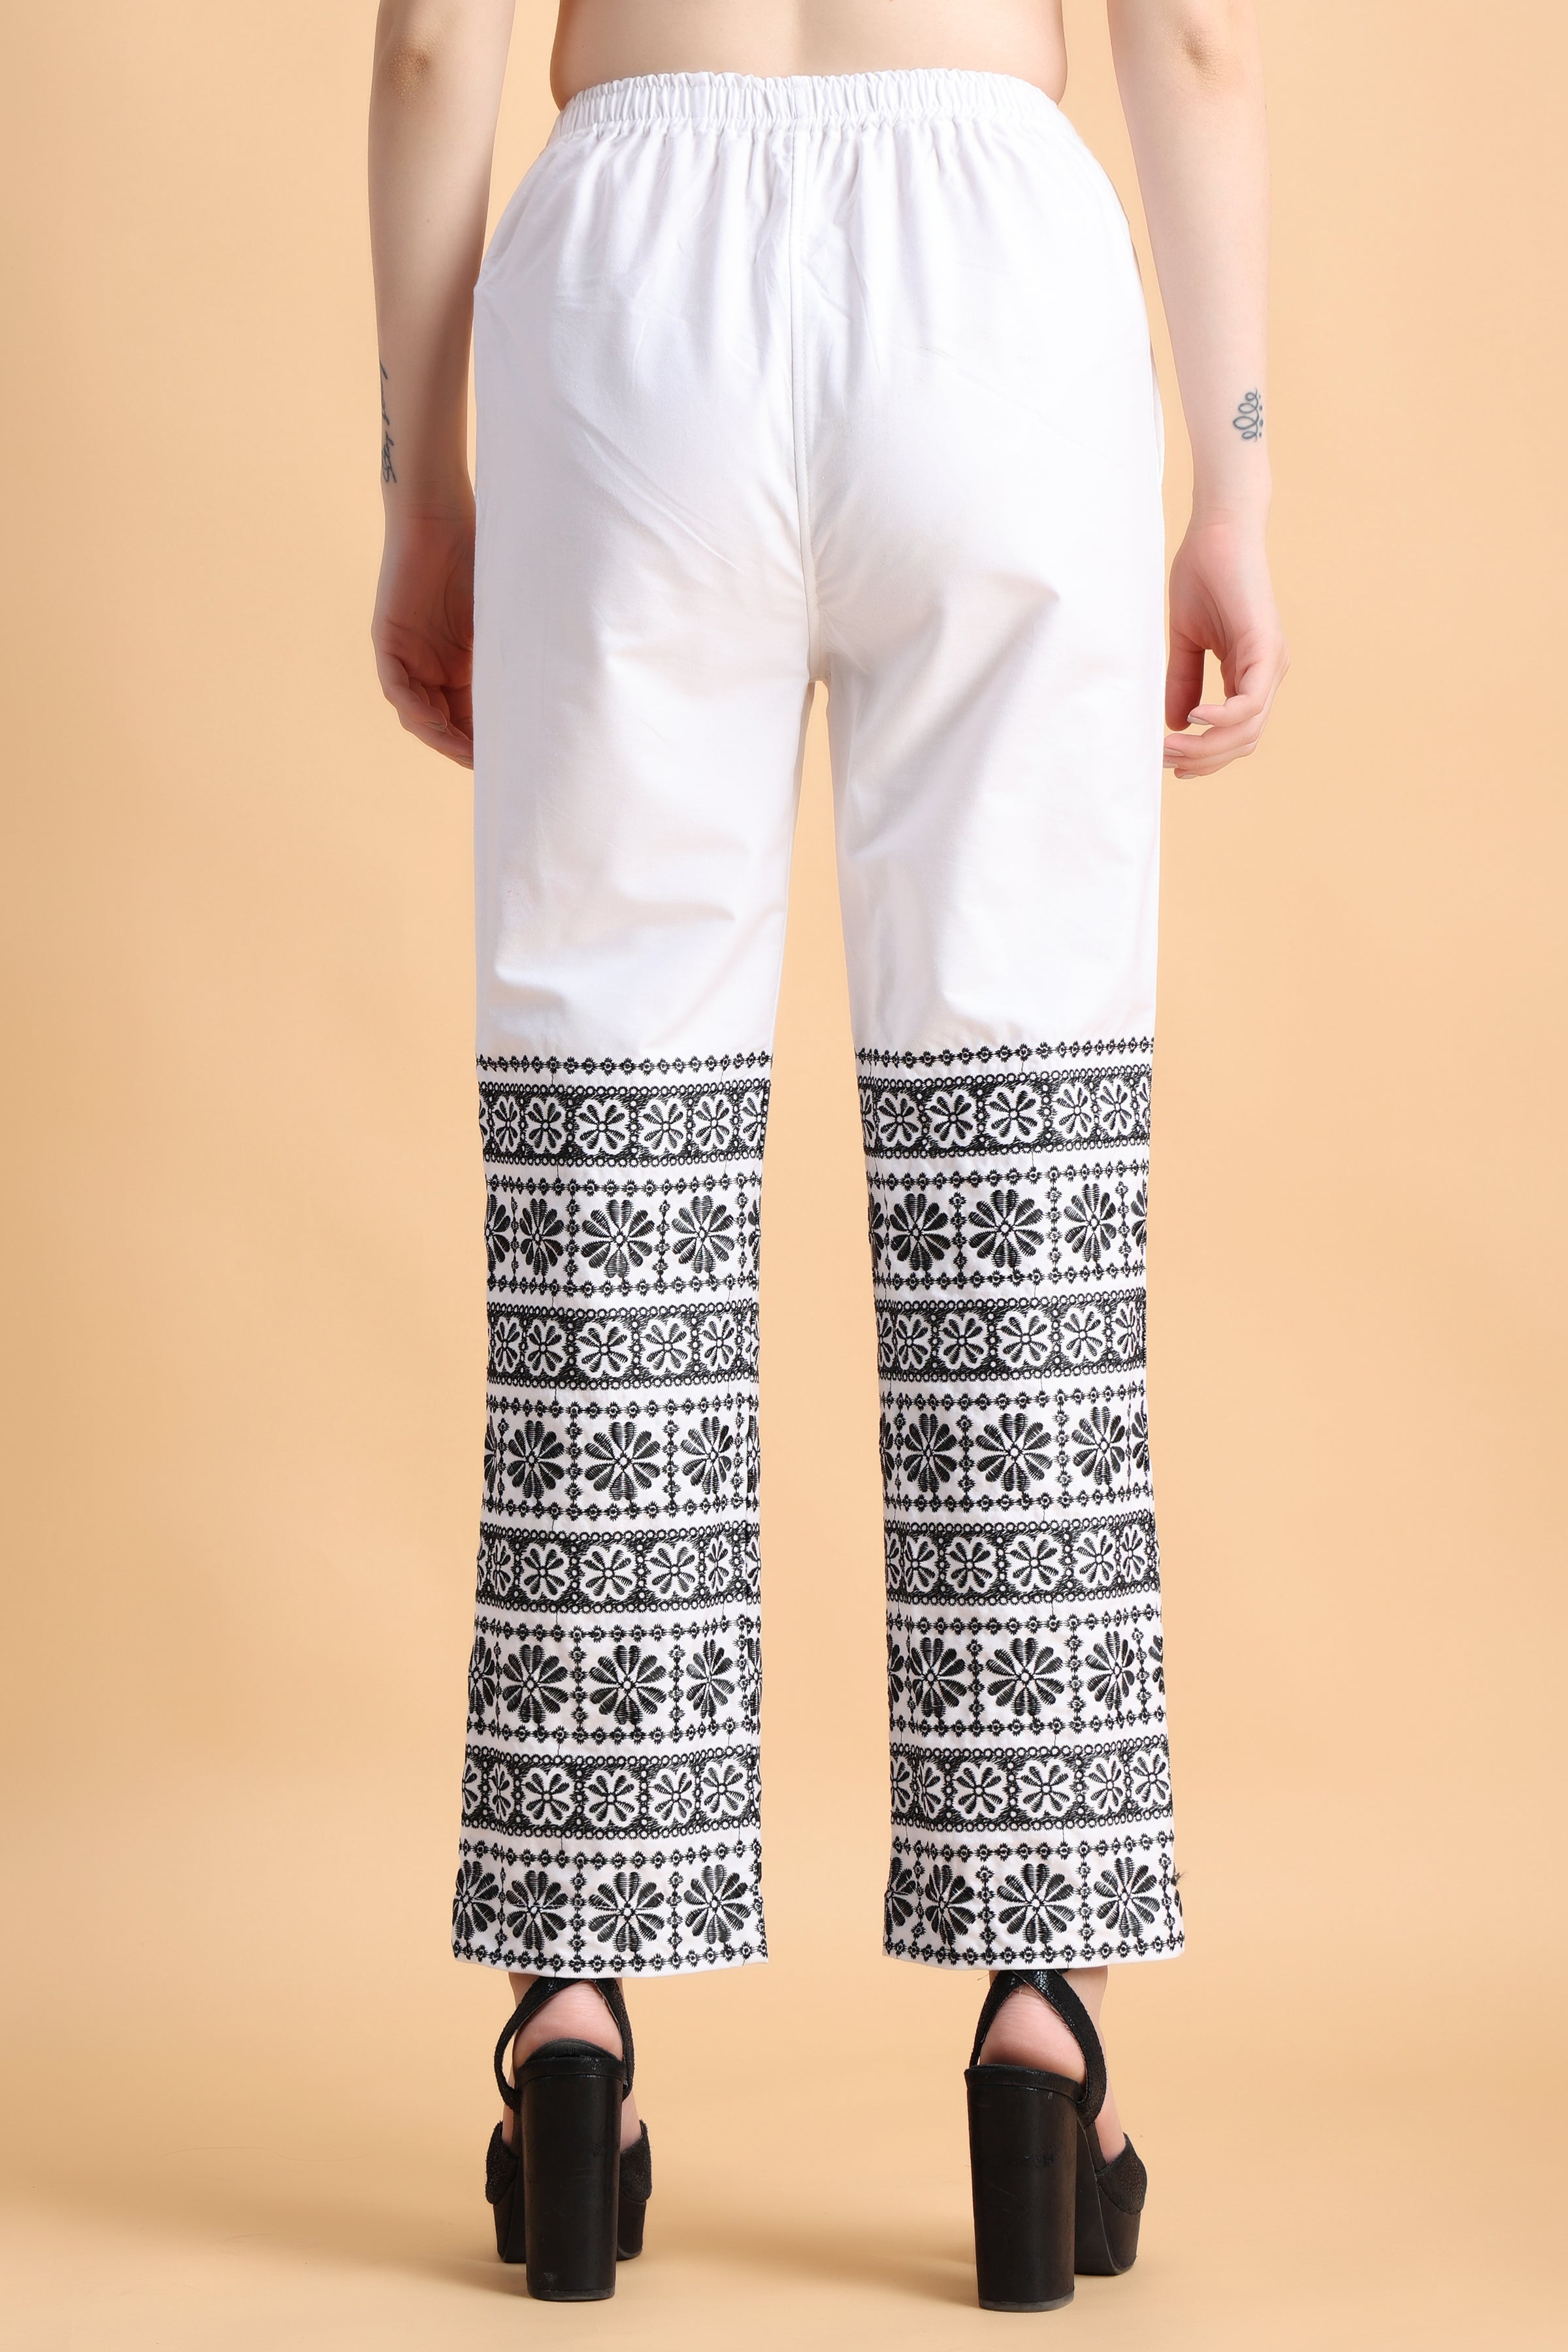 Vansha Women Summer High Waisted Cotton Linen Palazzo Pants Wide Leg Long  Lounge | eBay